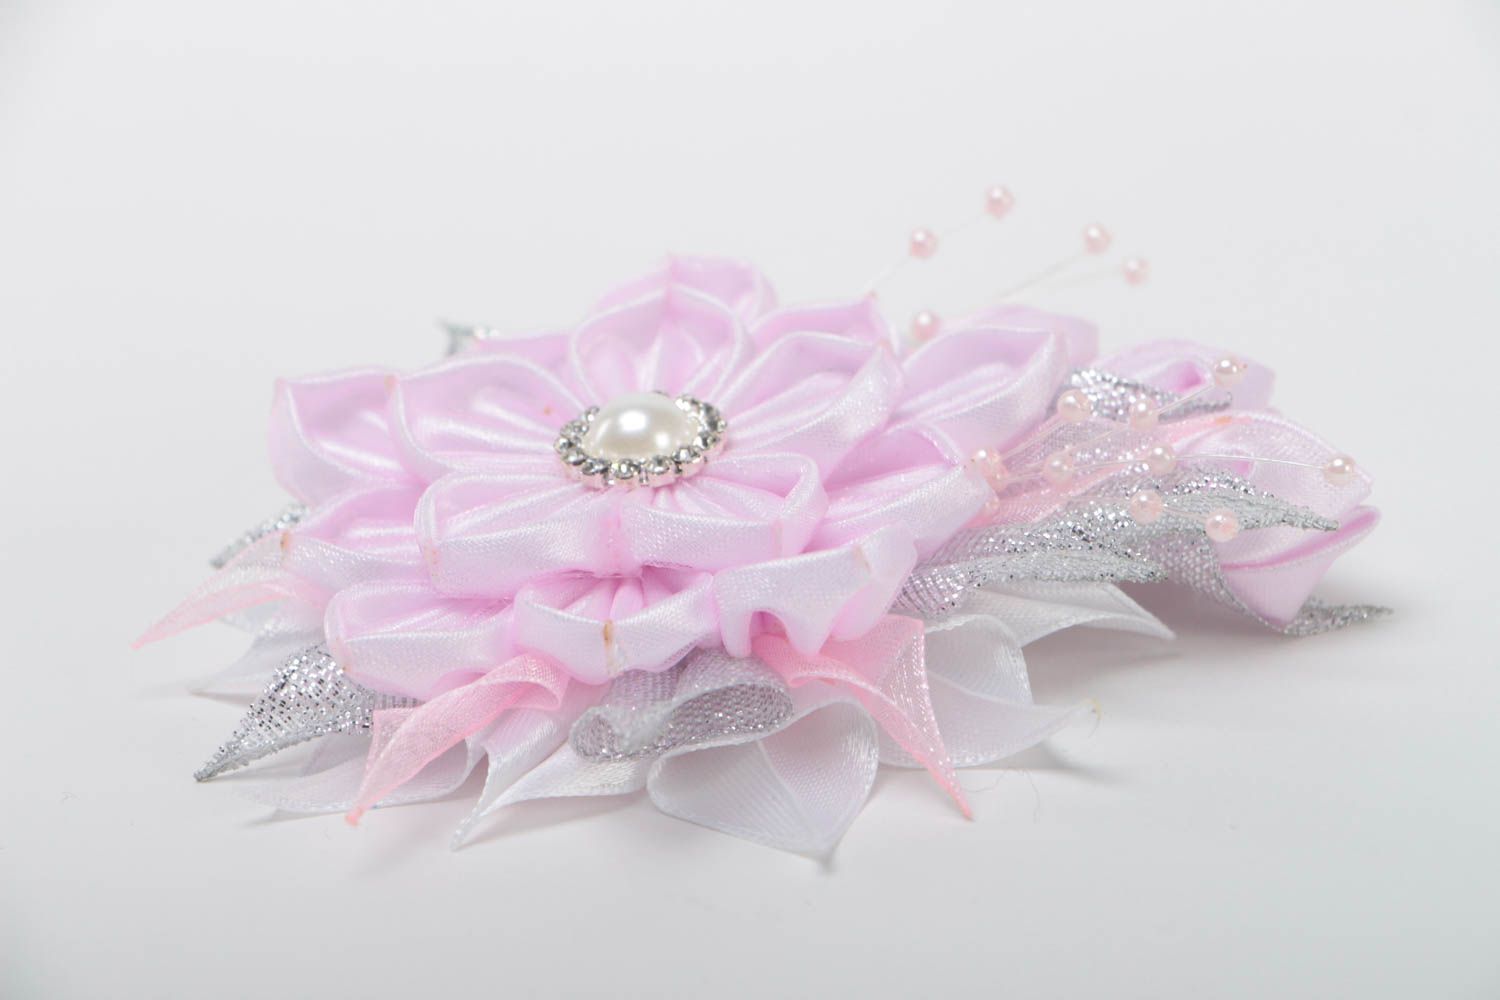 Gentle handmade flower brooch textile floristry fashion accessories gift ideas photo 3